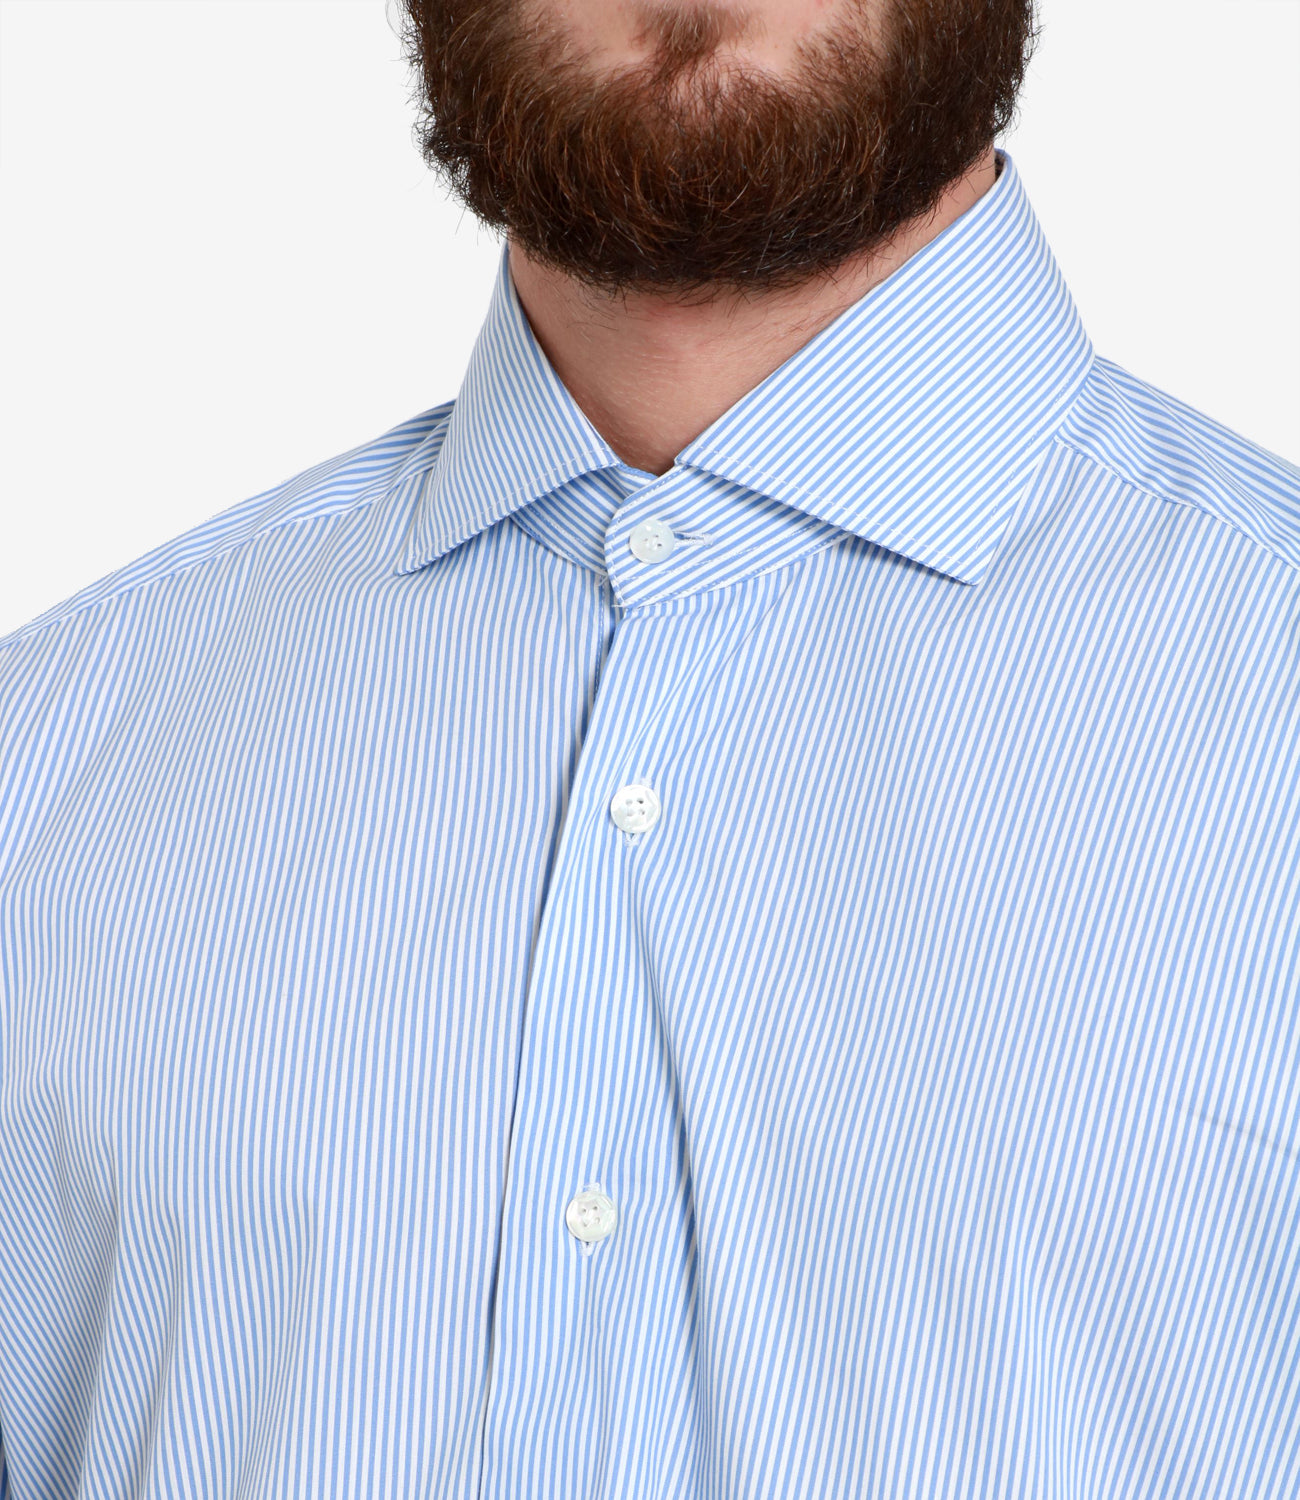 Beard | White and Light Blue Shirt